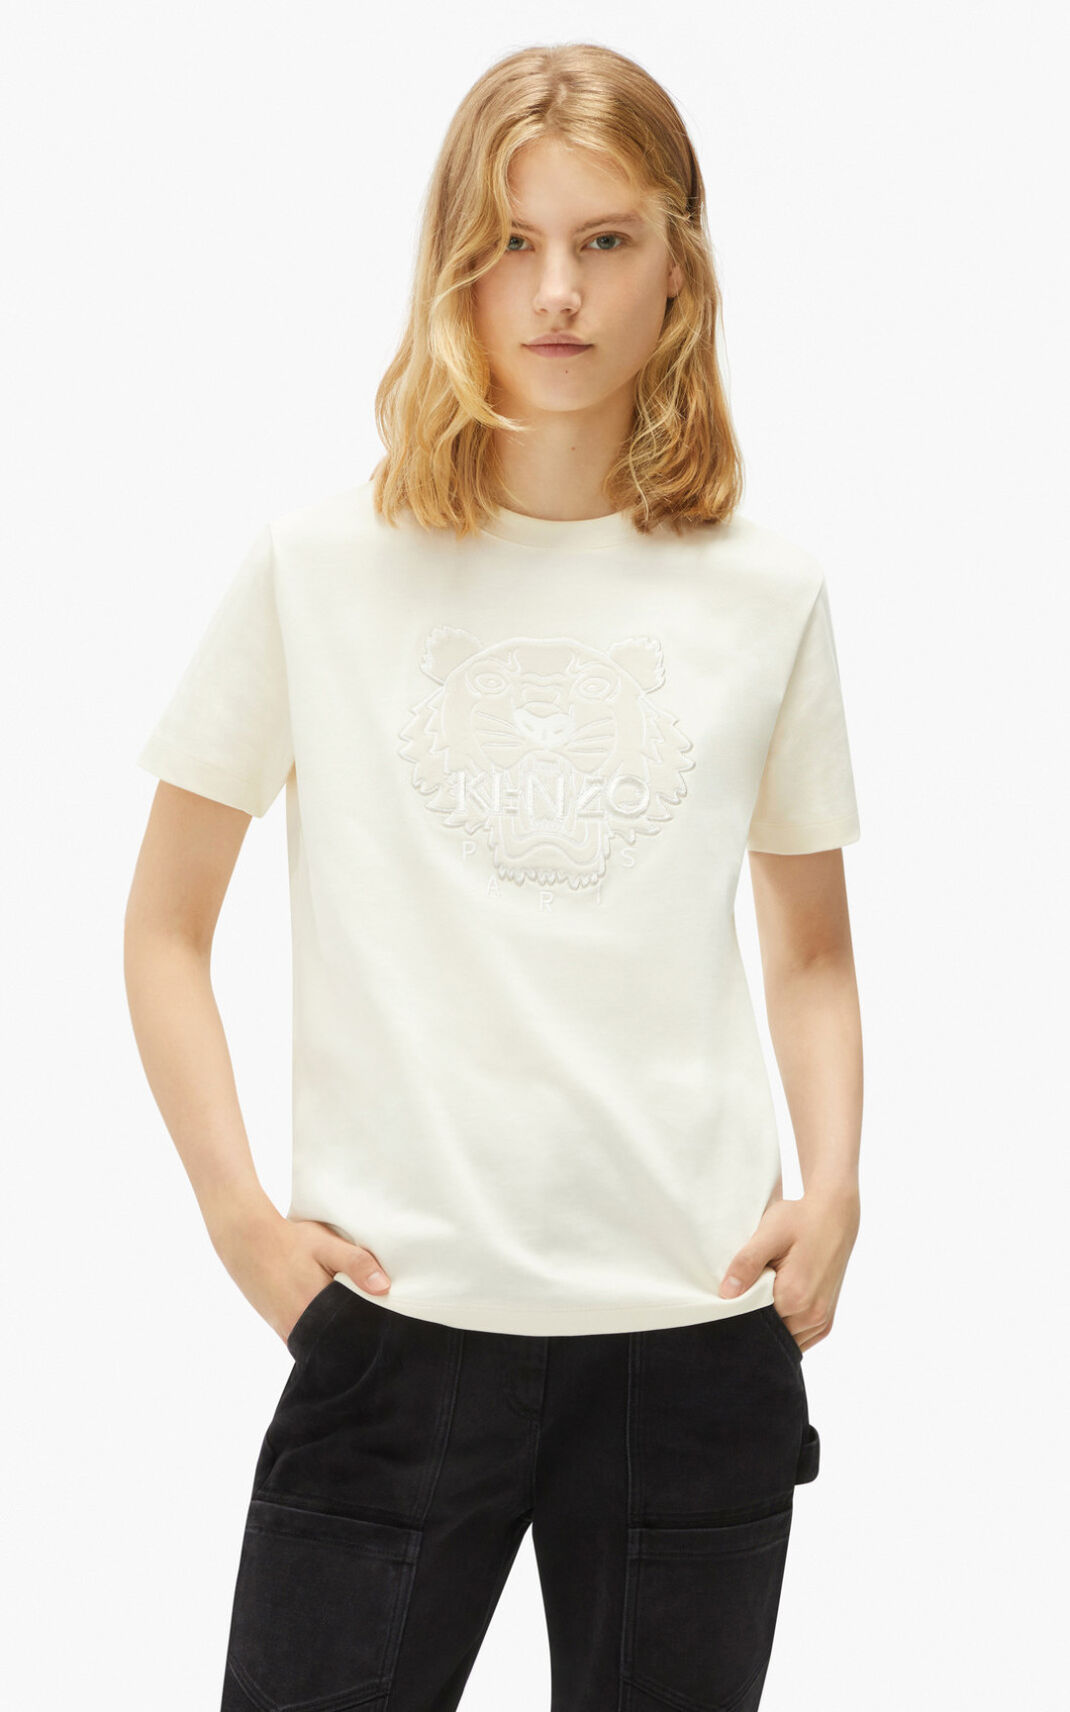 Camisetas Kenzo The Invierno Capsule loose fit tiger Mujer Blancas - SKU.1549141